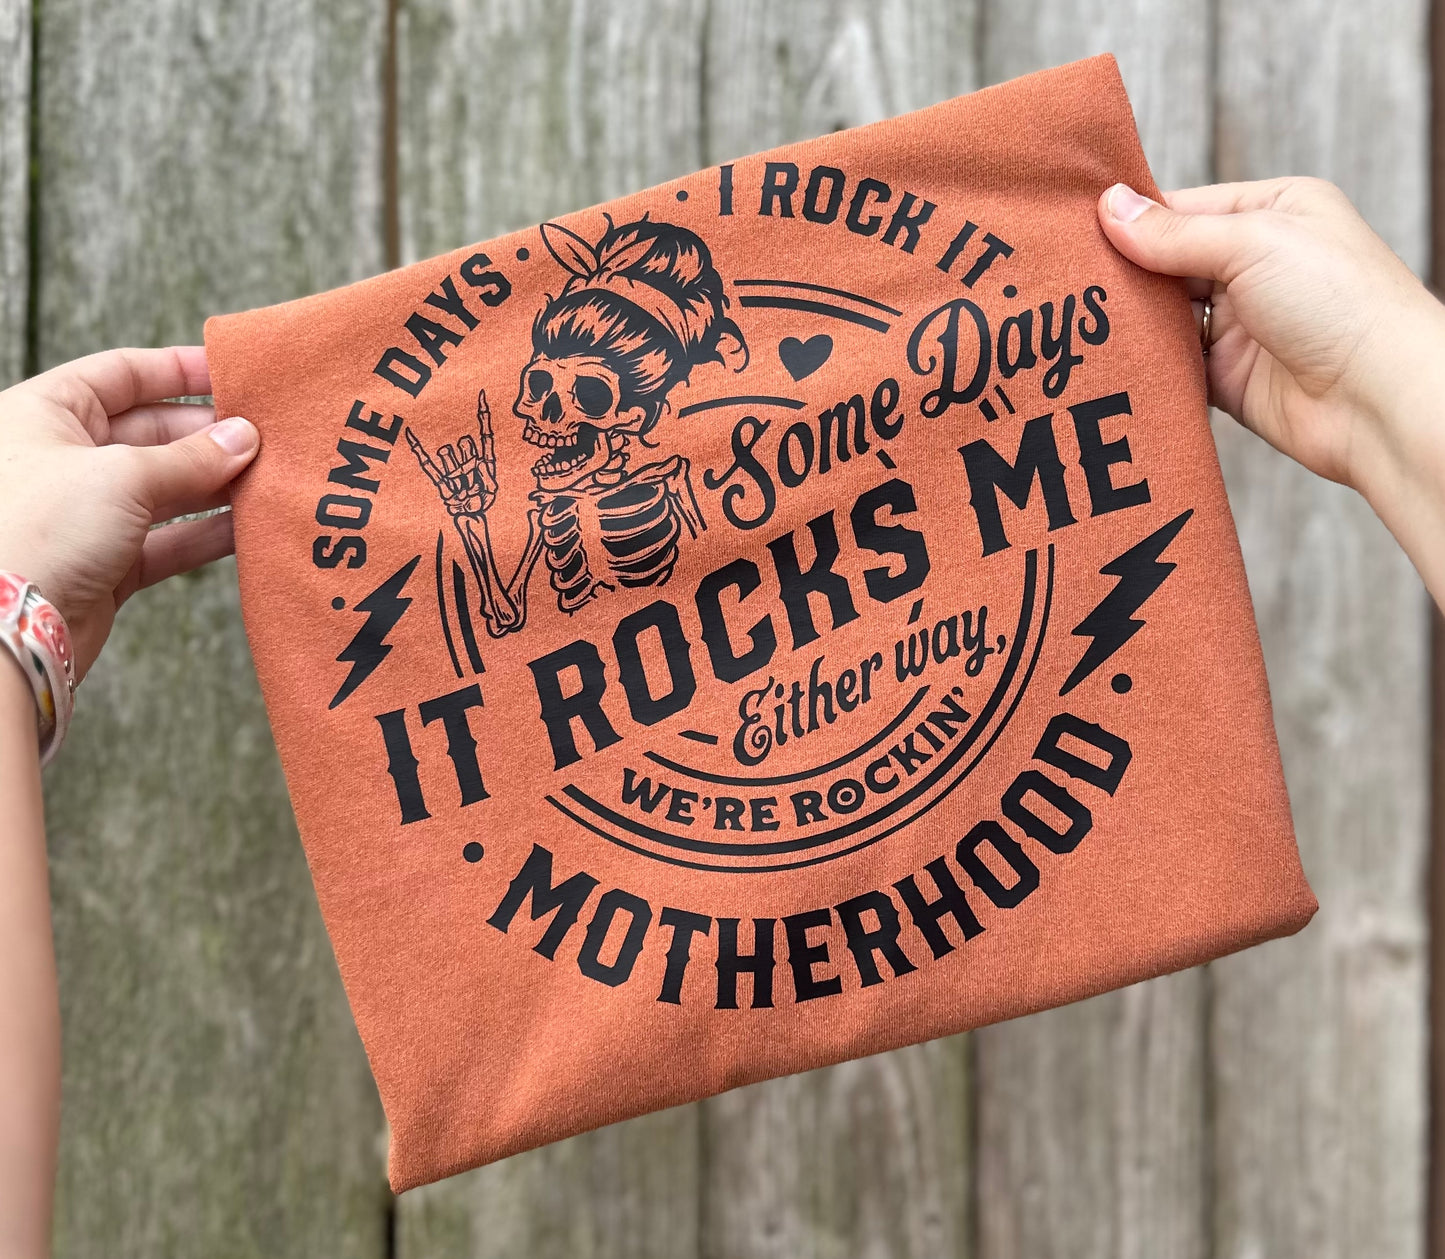 We Rockin’ Motherhood